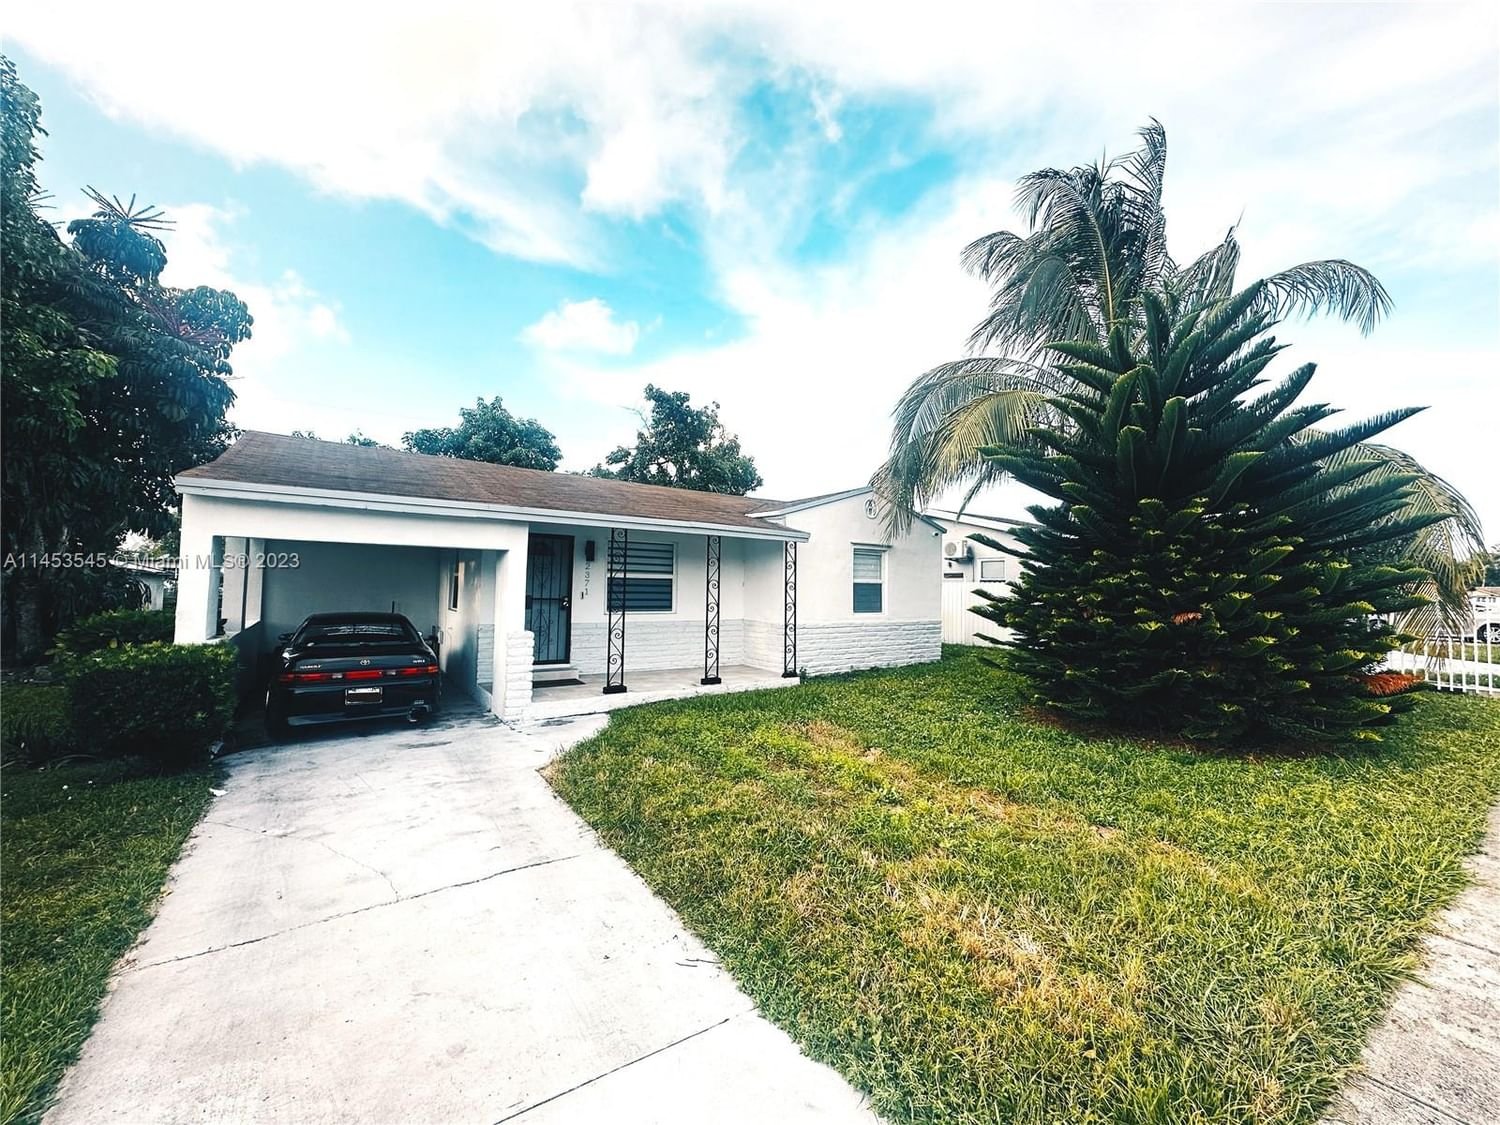 Real estate property located at 2371 85th St, Miami-Dade County, Miami, FL